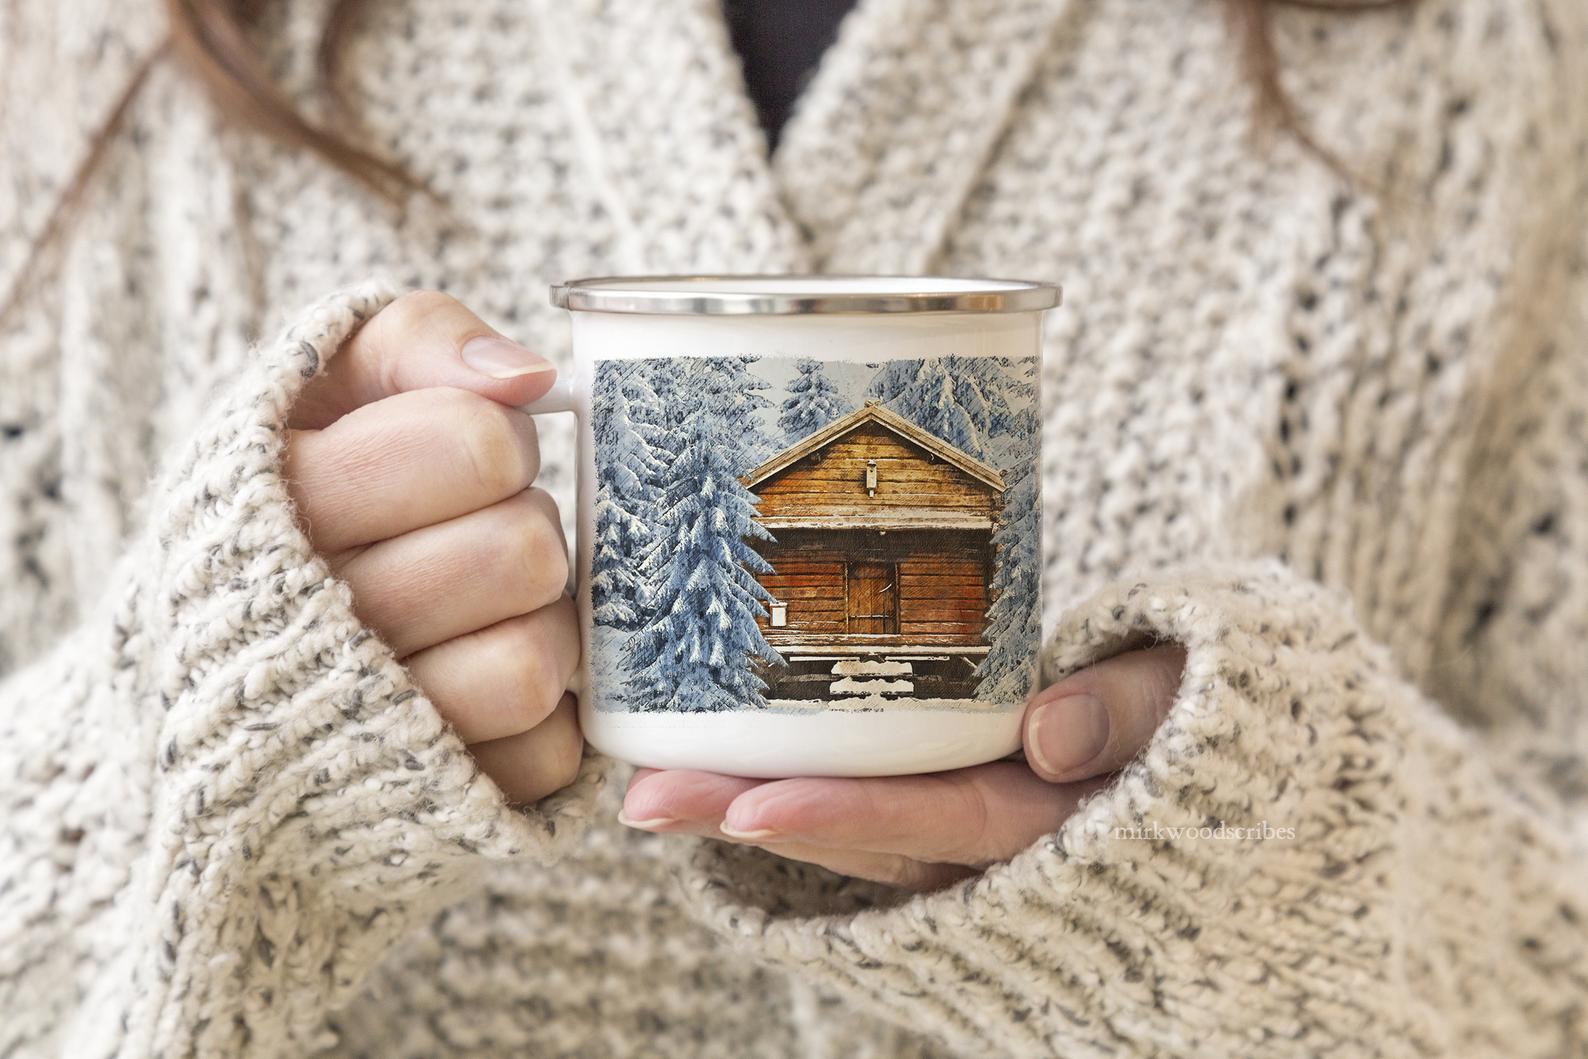 2022 Holiday Confetti Glass Mug – Treasures of Snow